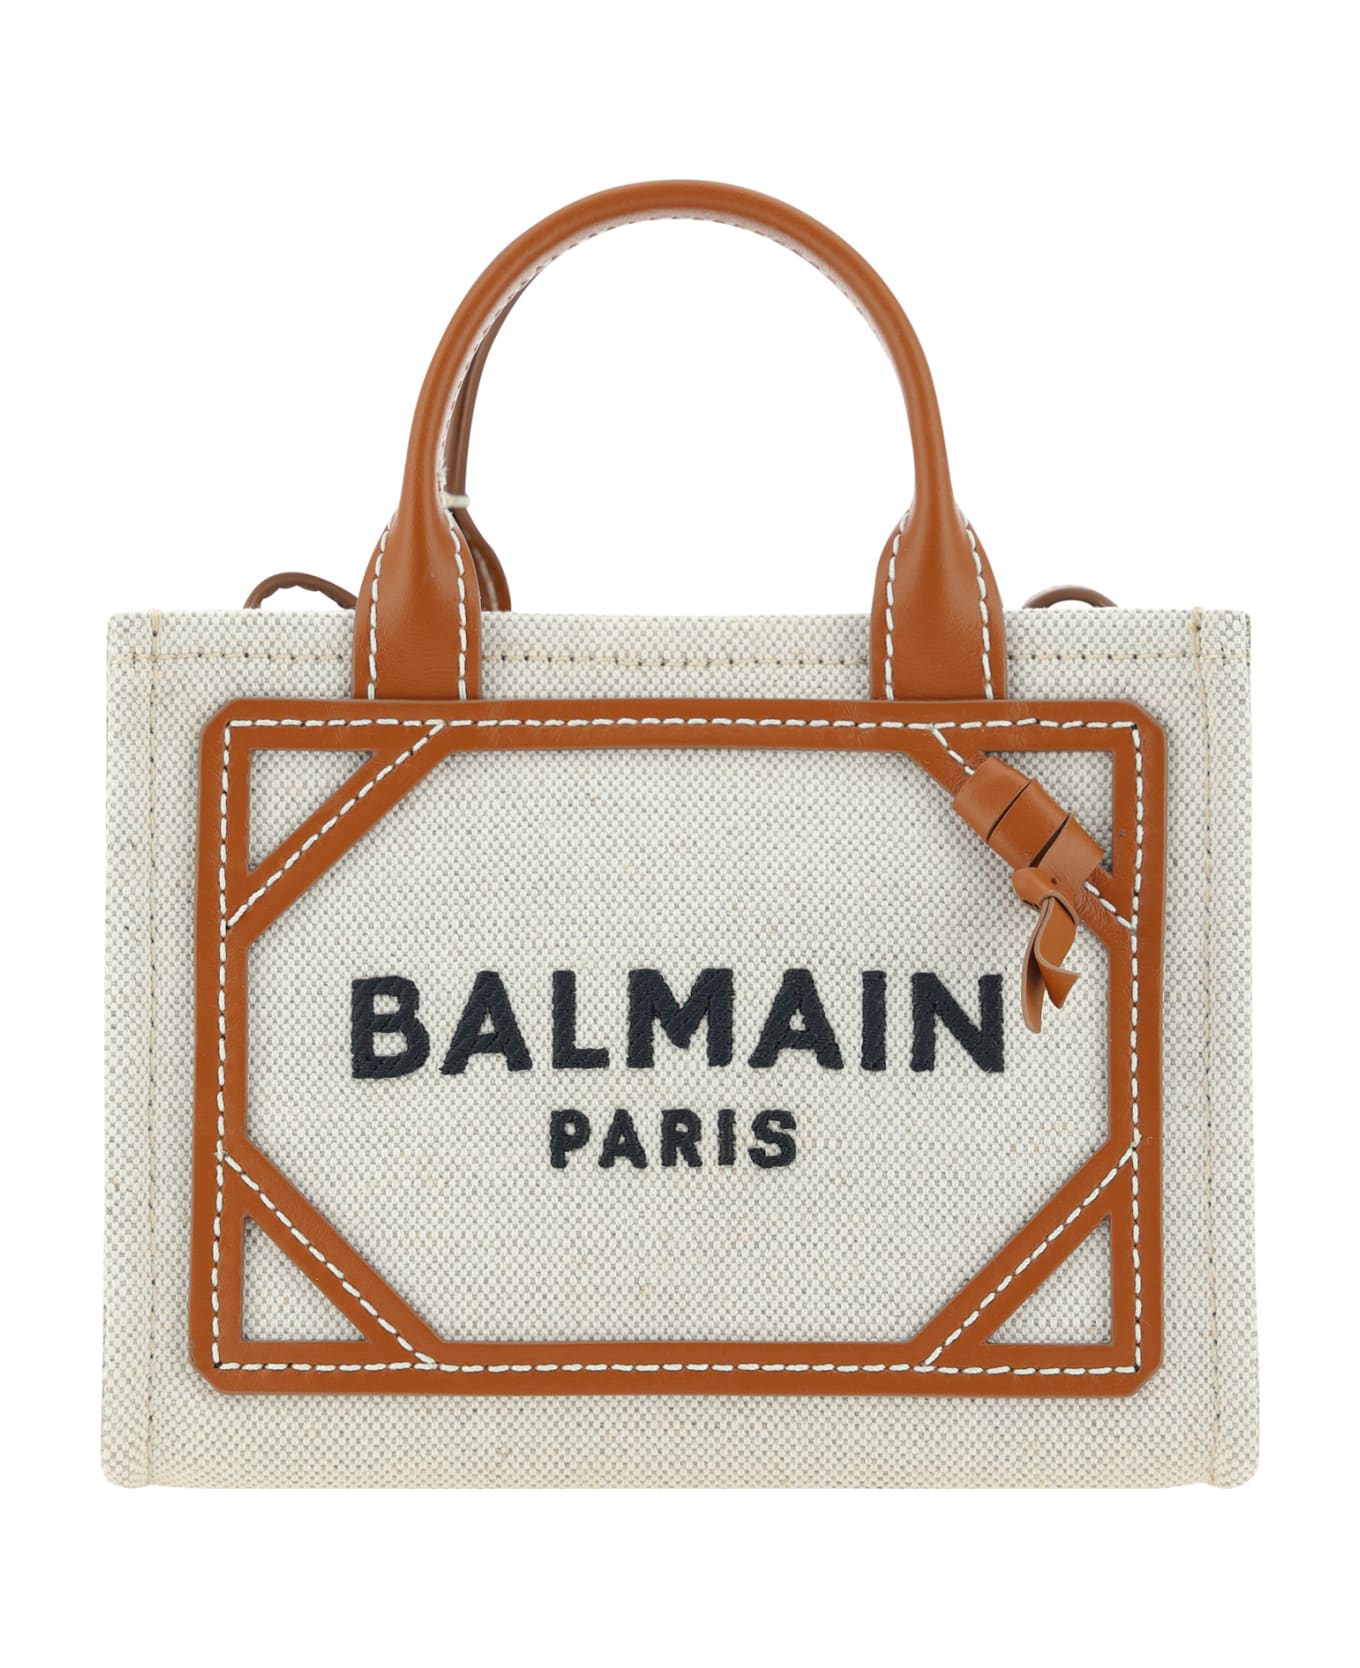 Balmain B-army Handbag - Gem Naturel/marron トートバッグ